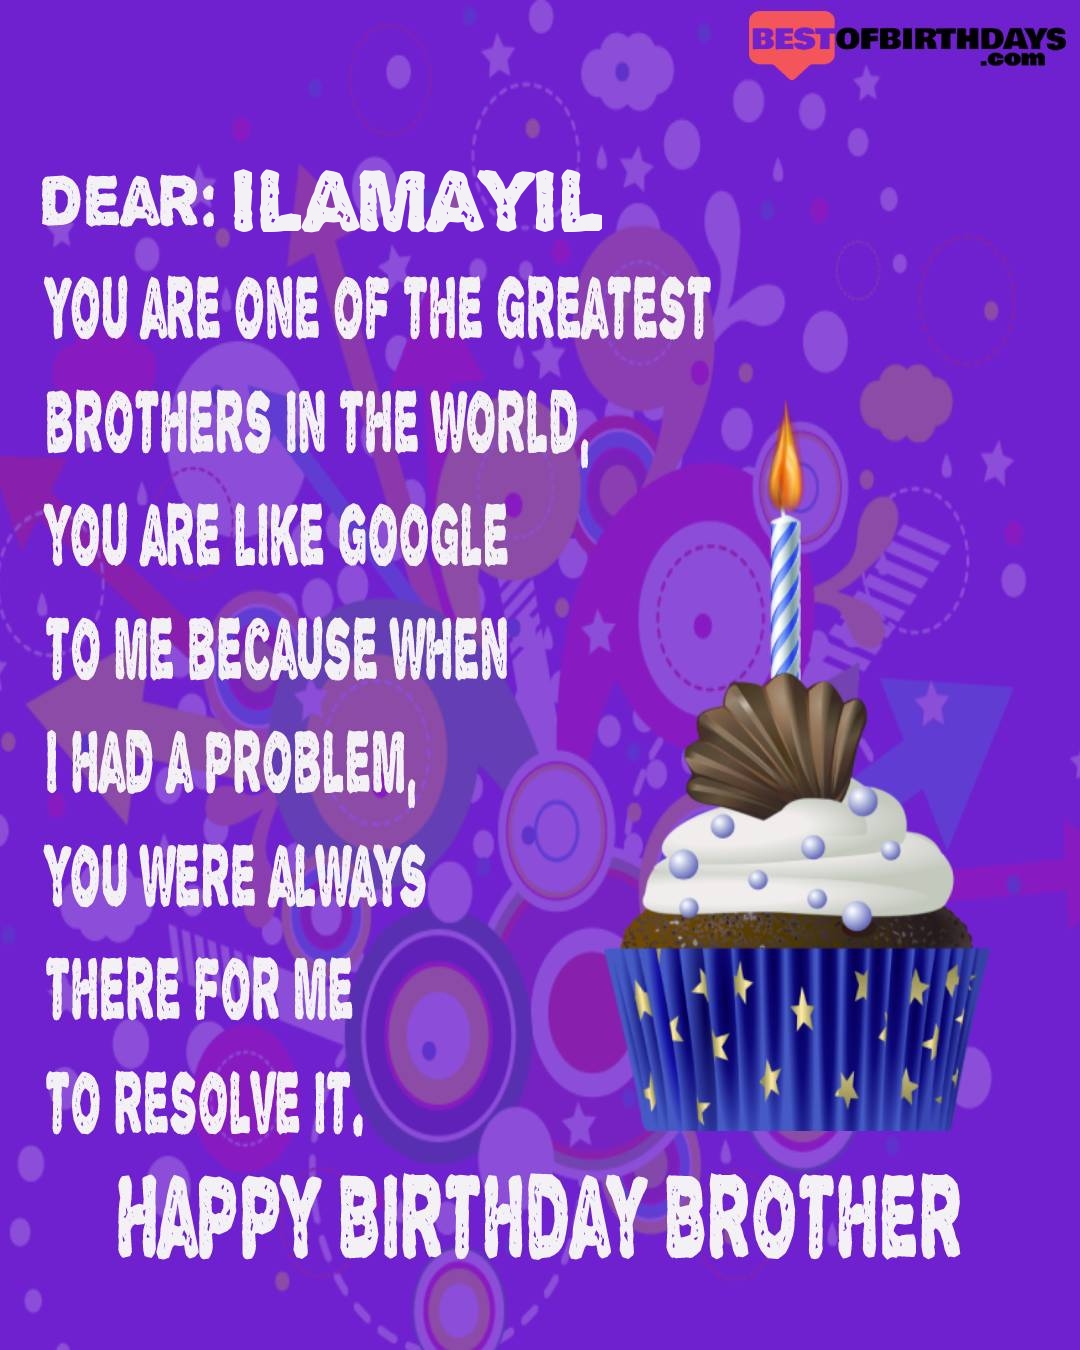 Happy birthday ilamayil bhai brother bro